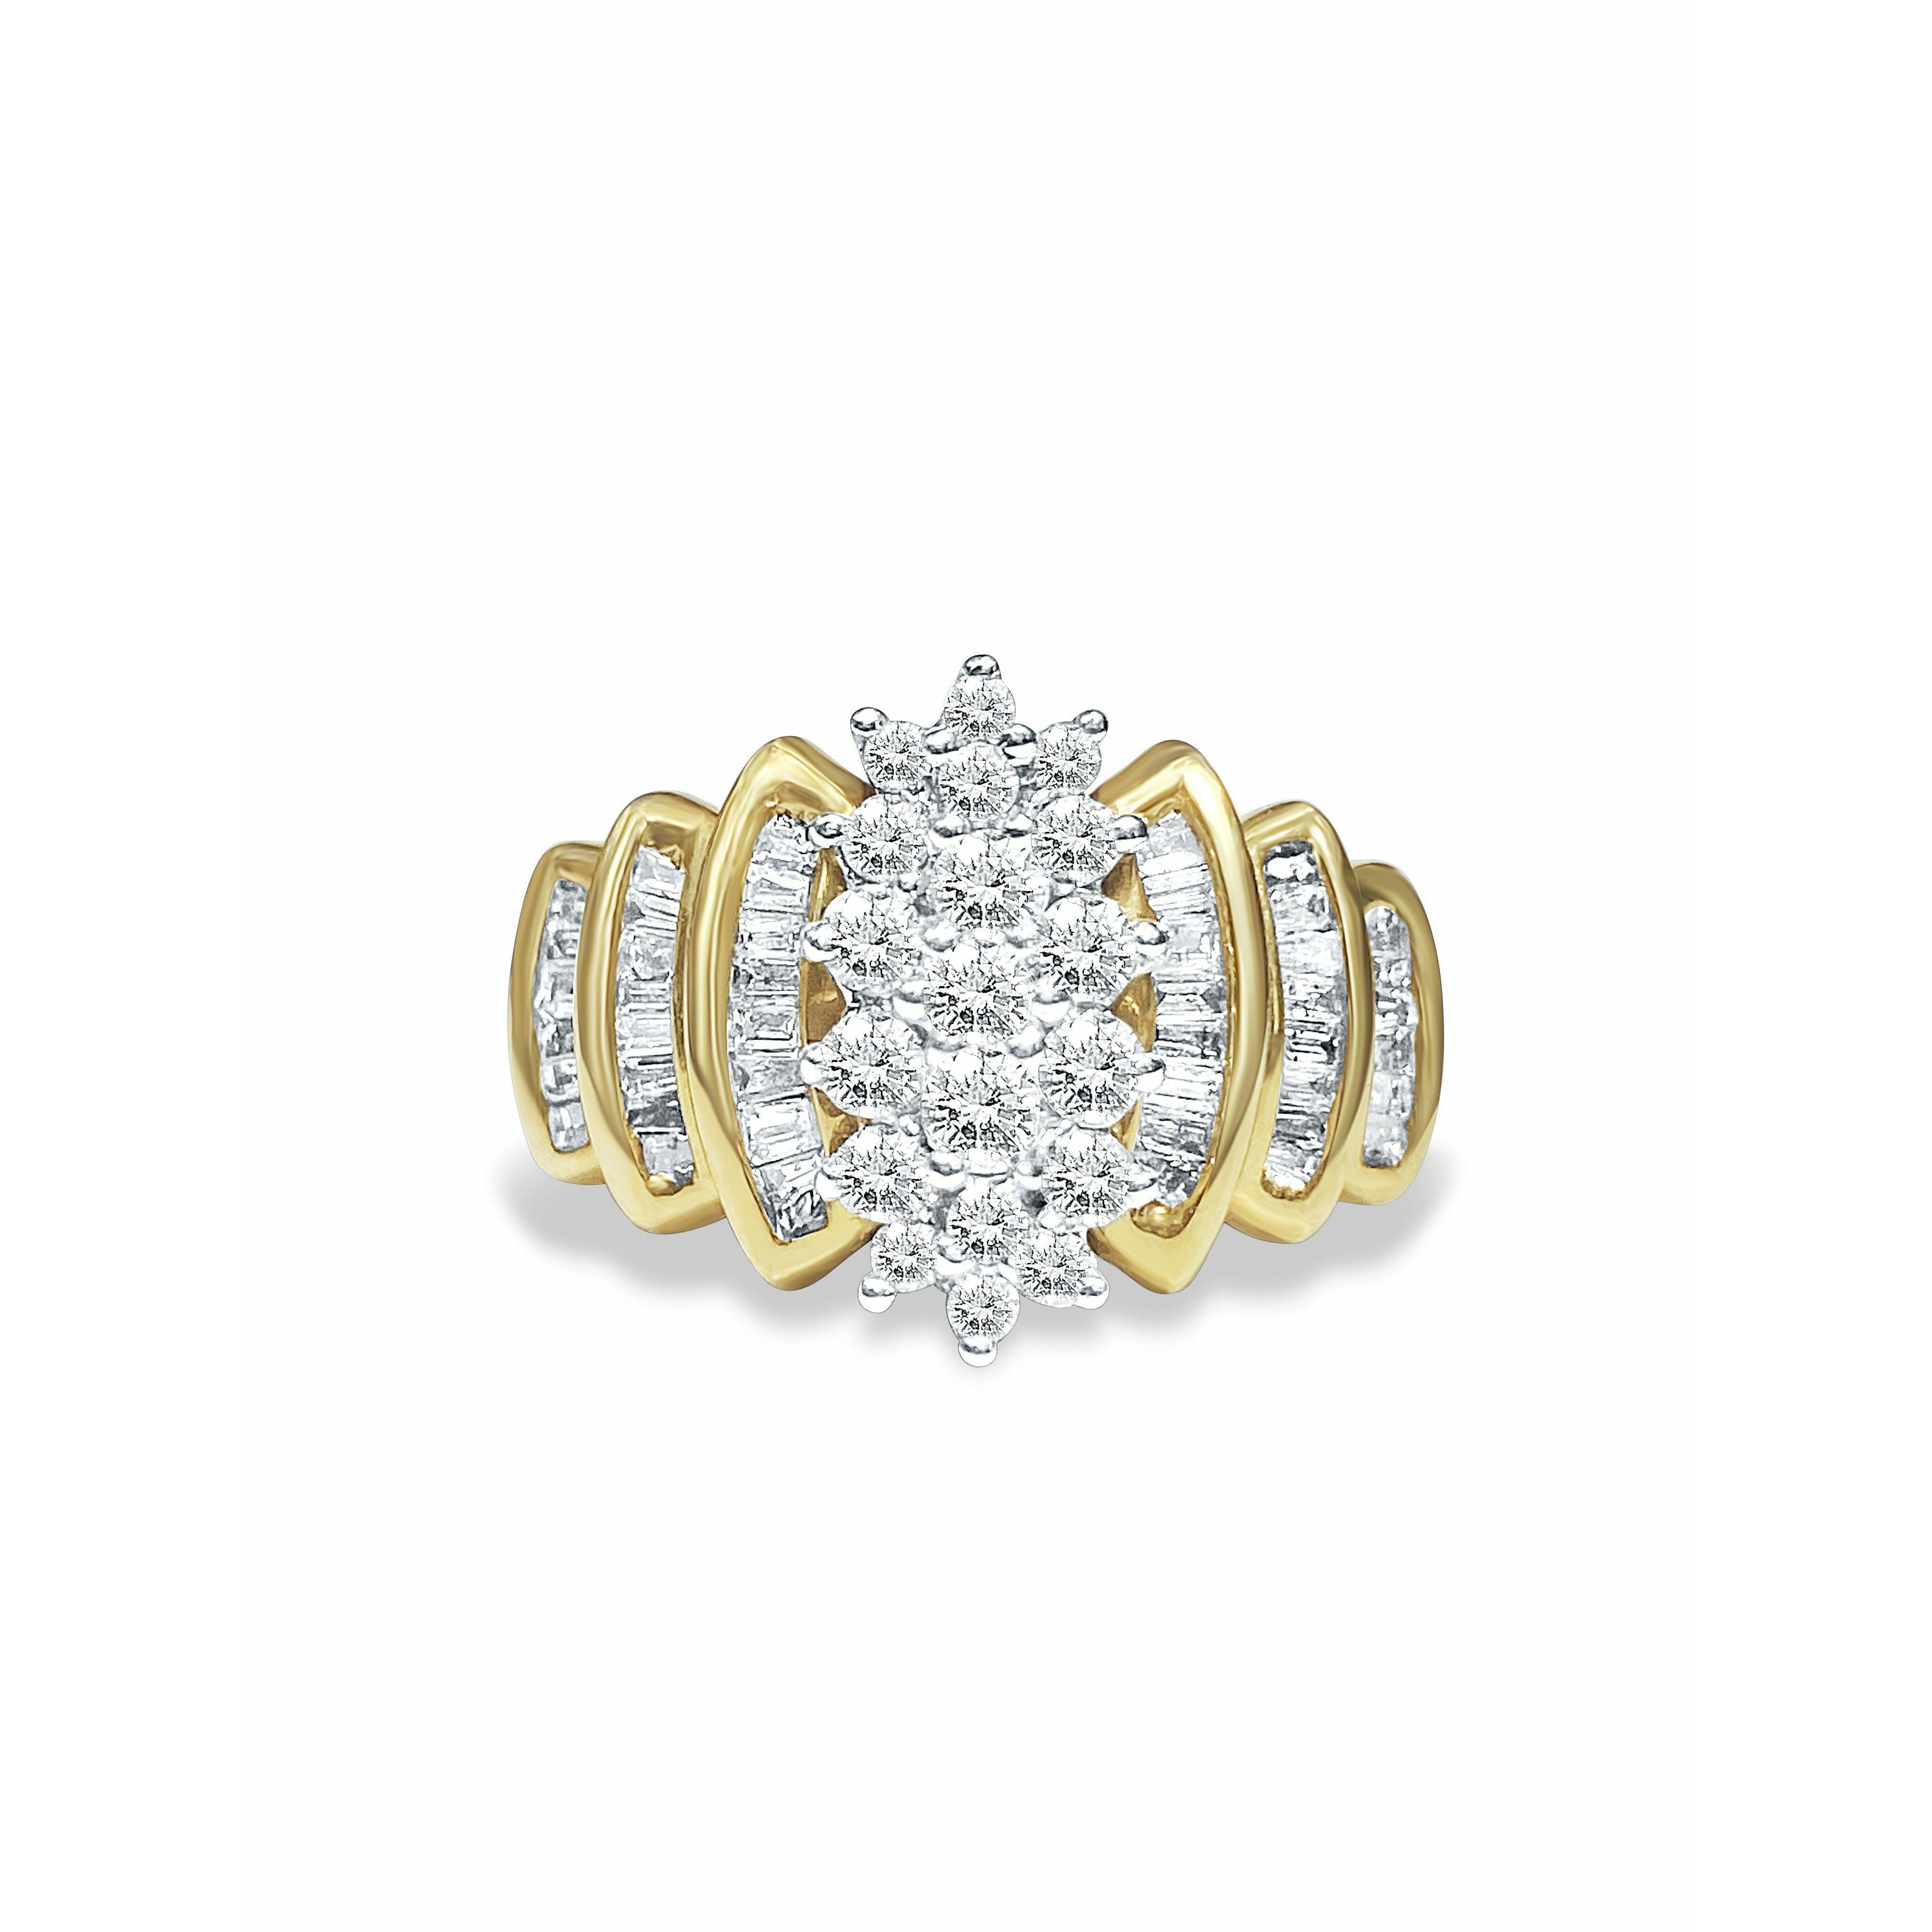 1.30 Carat Diamond Cluster Ring in 14k Yellow Gold - ASSAY